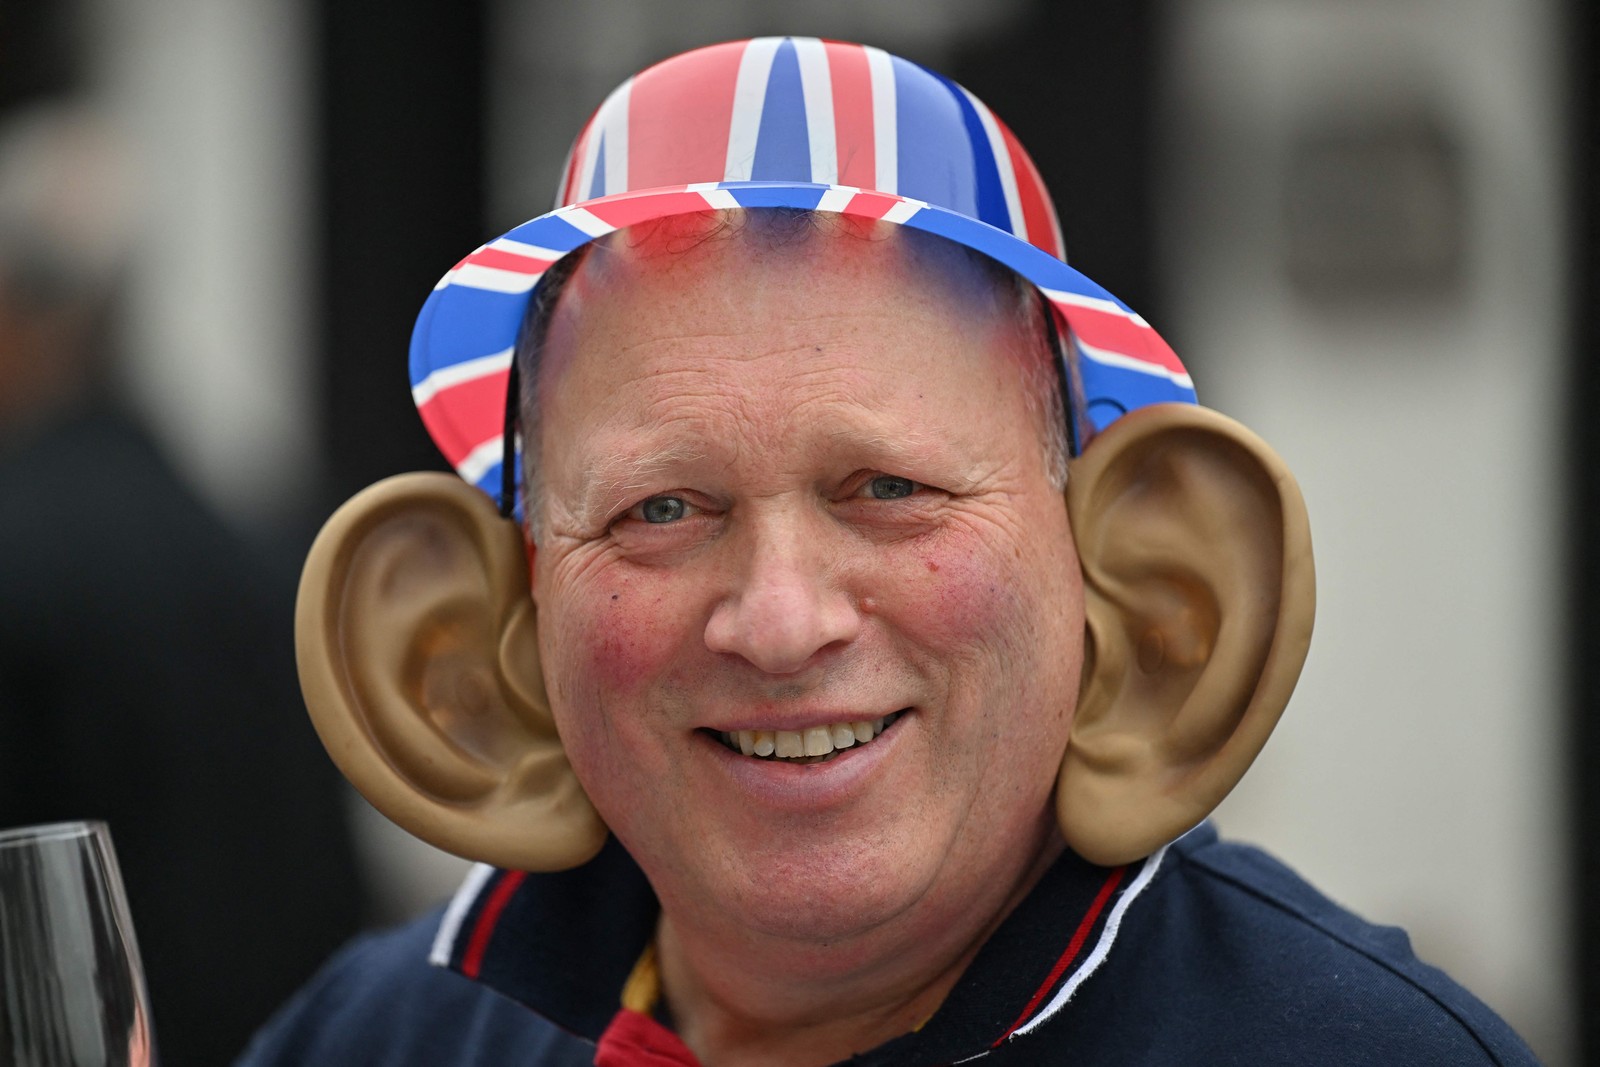 Homem usa um chapéu orelhas grandes em Alfriston — Foto: GLYN KIRK / AFP